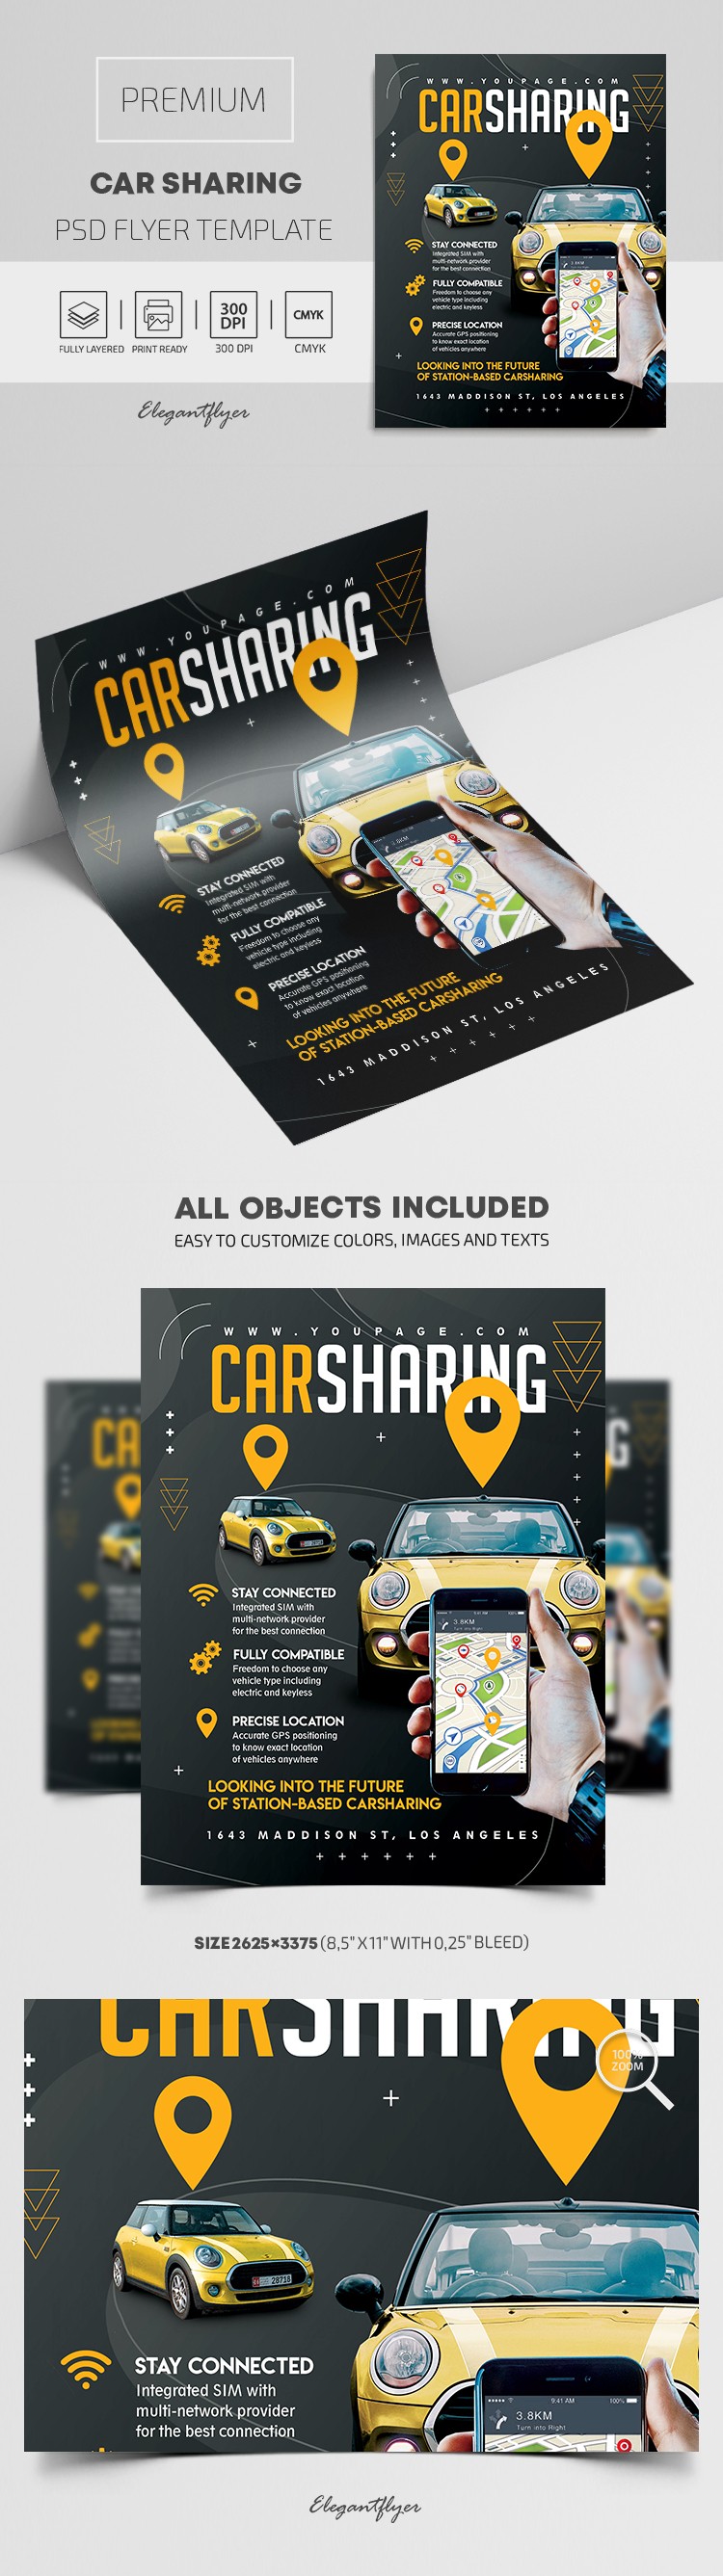 Car Sharing Flyer by ElegantFlyer